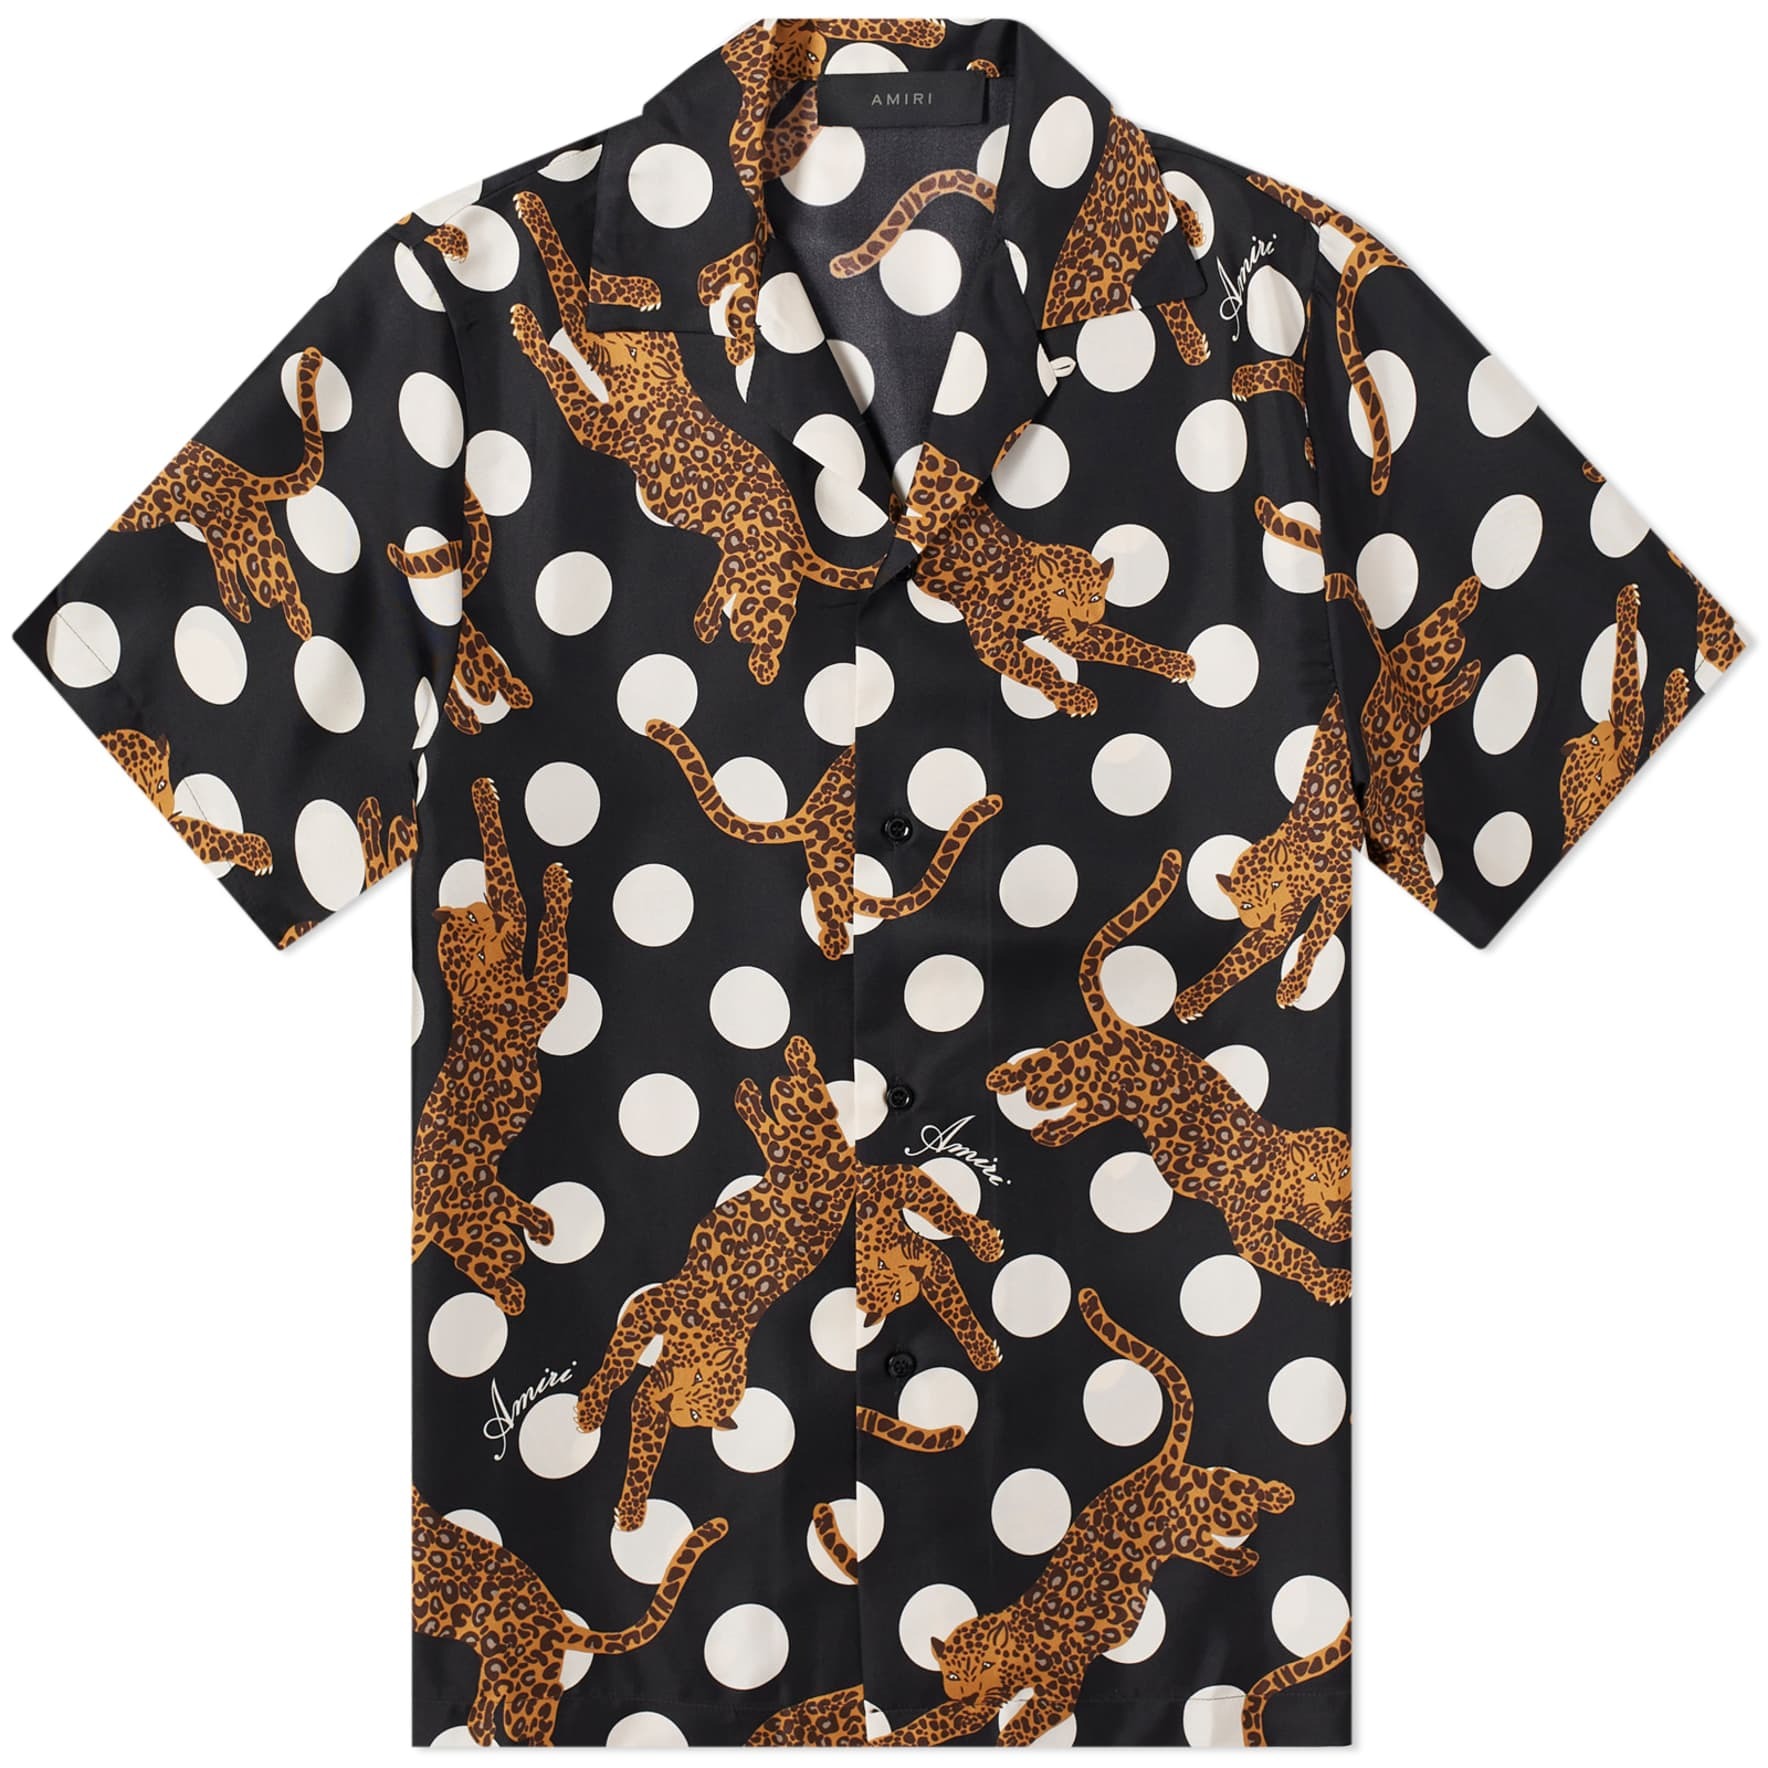 Рубашка Amiri Leopard Polka Short Sleeve Vacation, черный/мультиколор